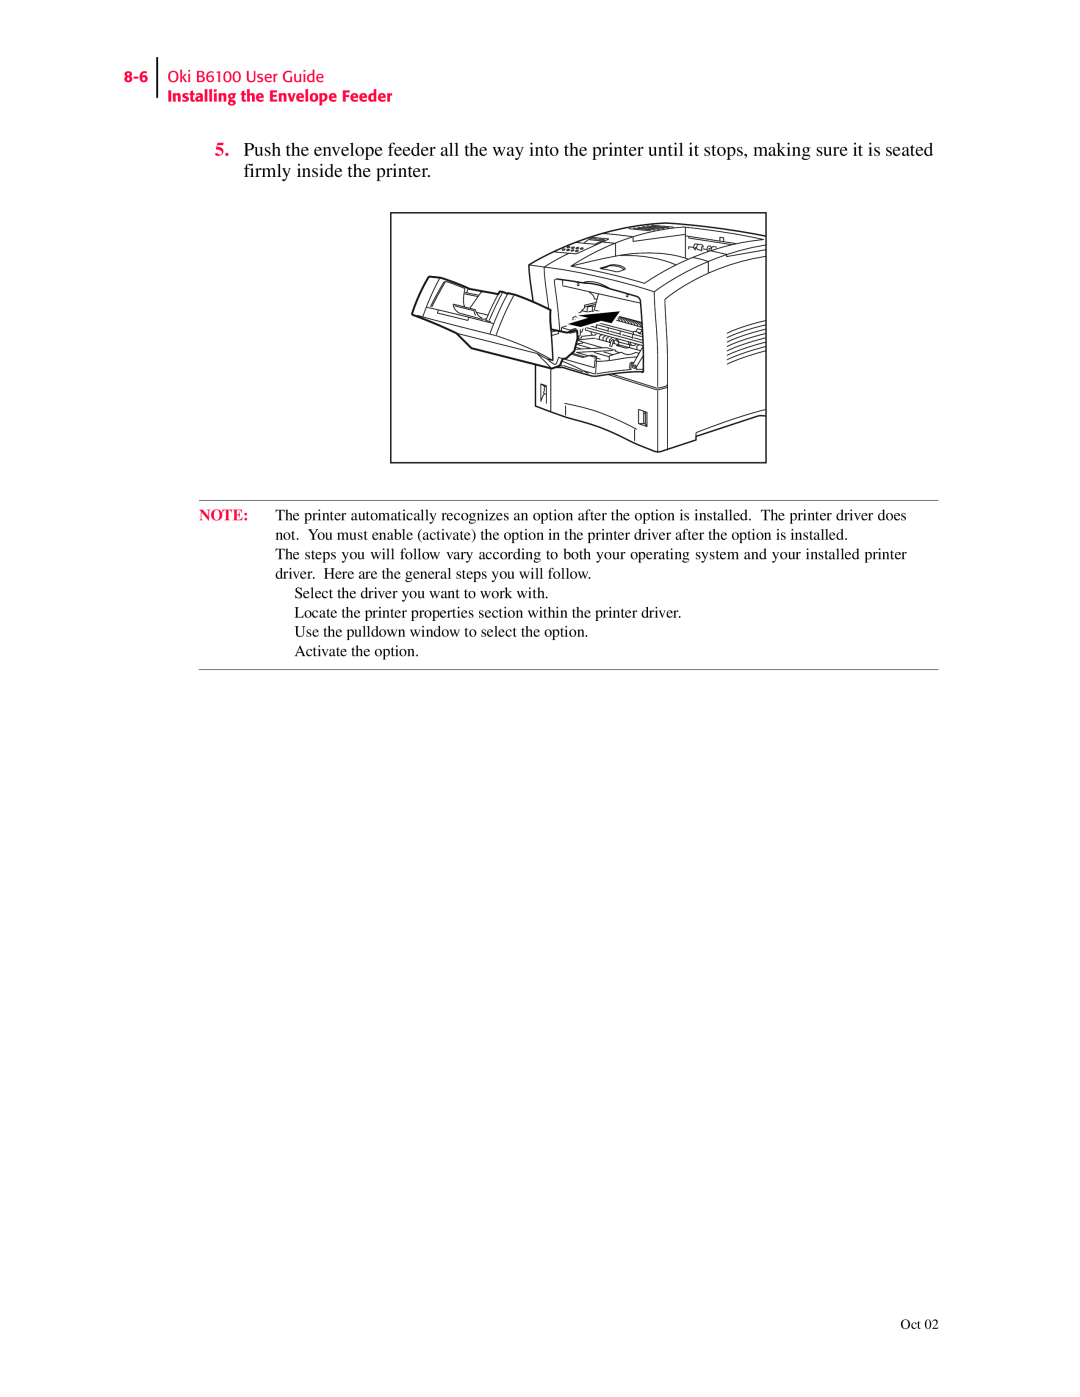 Oki manual Oki B6100 User Guide Installing the Envelope Feeder 